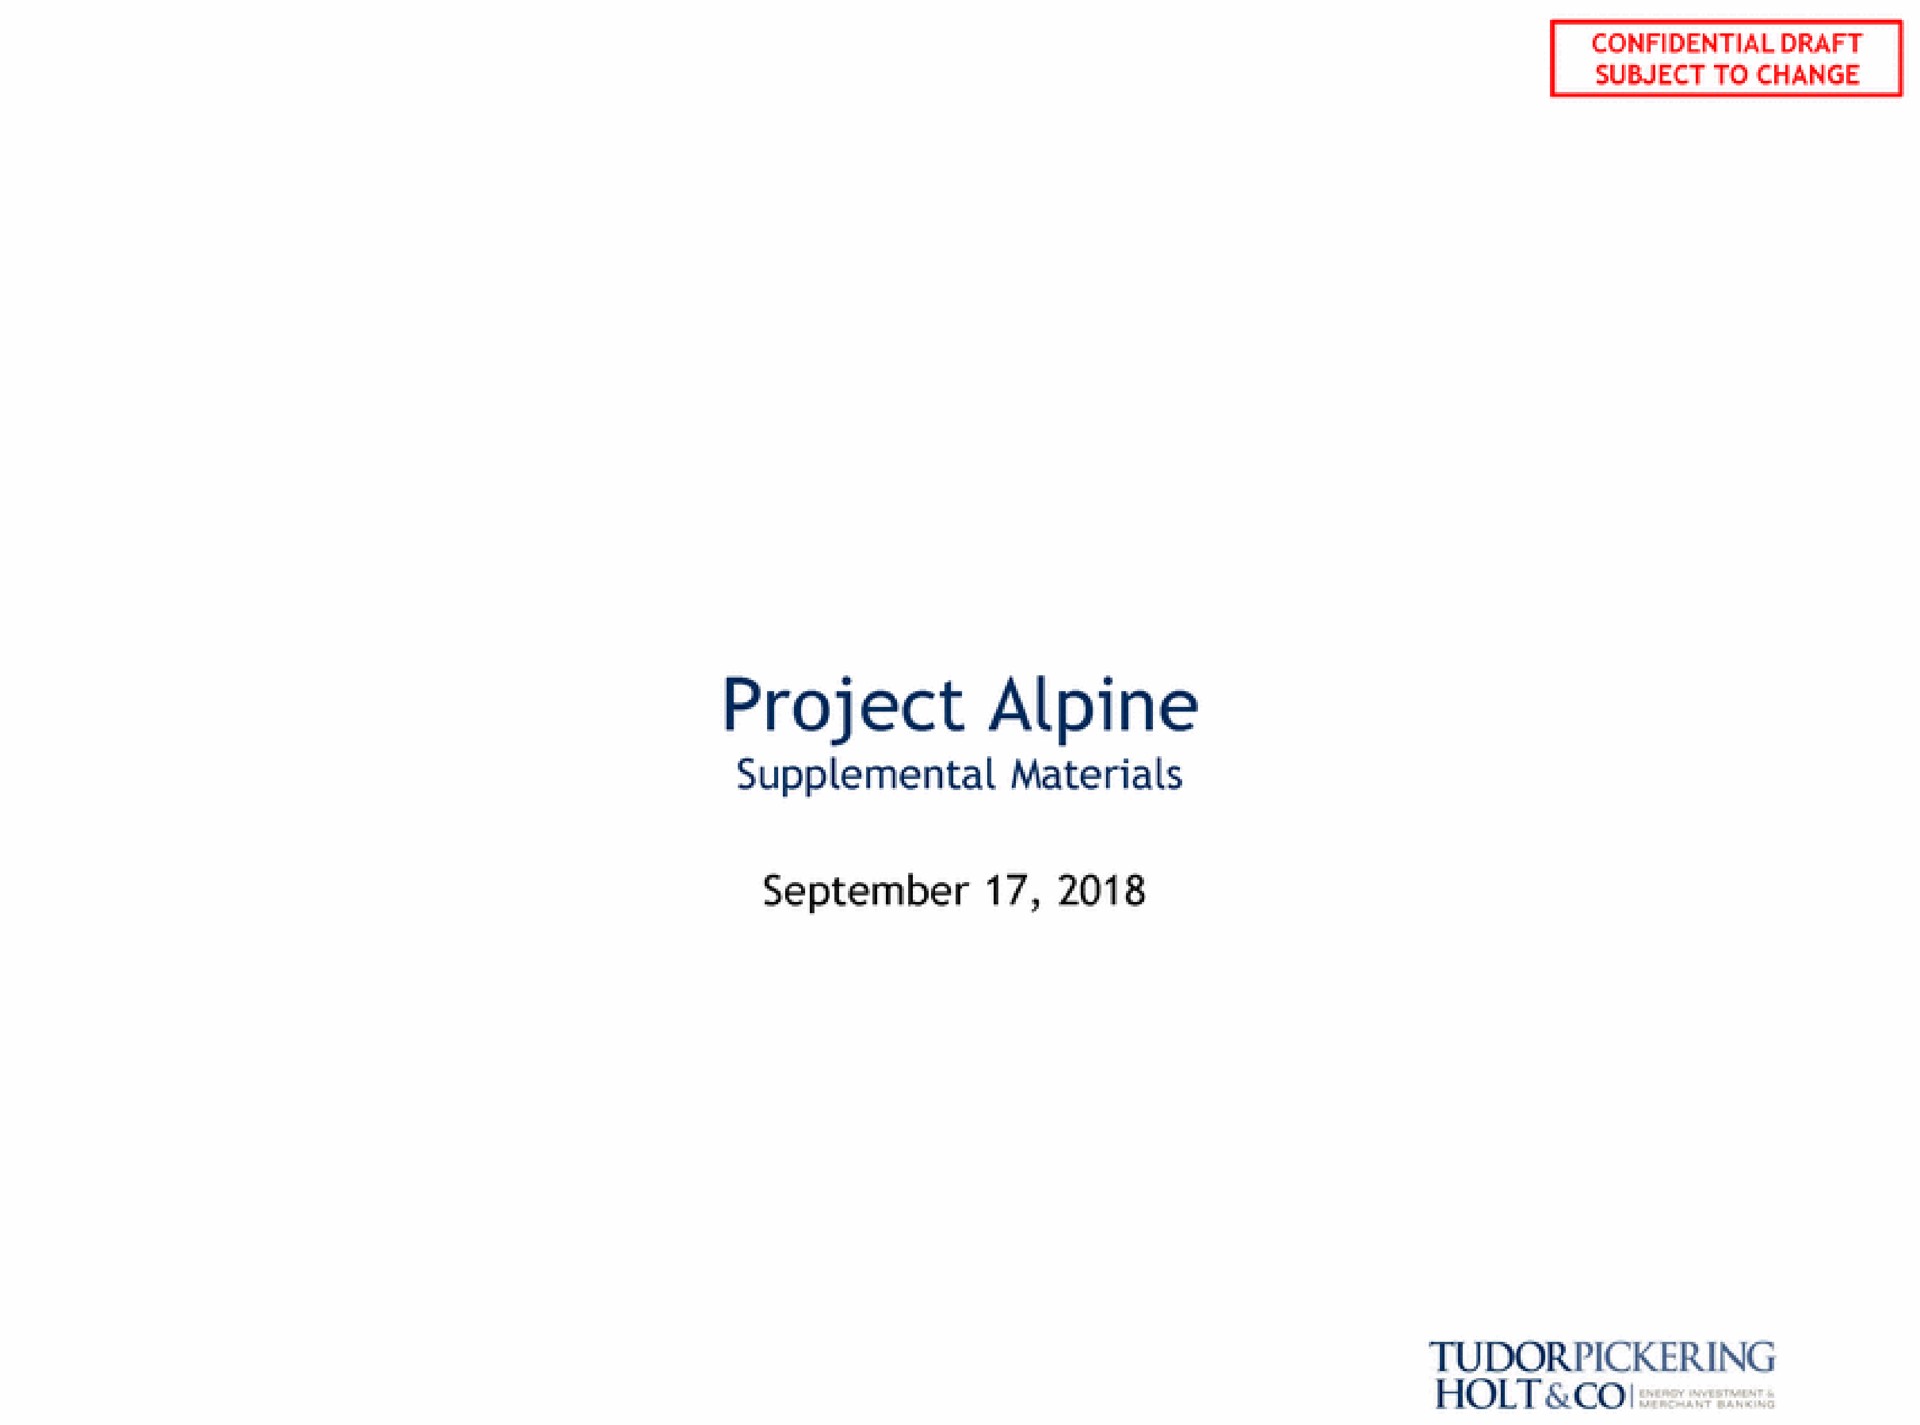 project alpine supplemental materials | Tudor, Pickering, Holt & Co